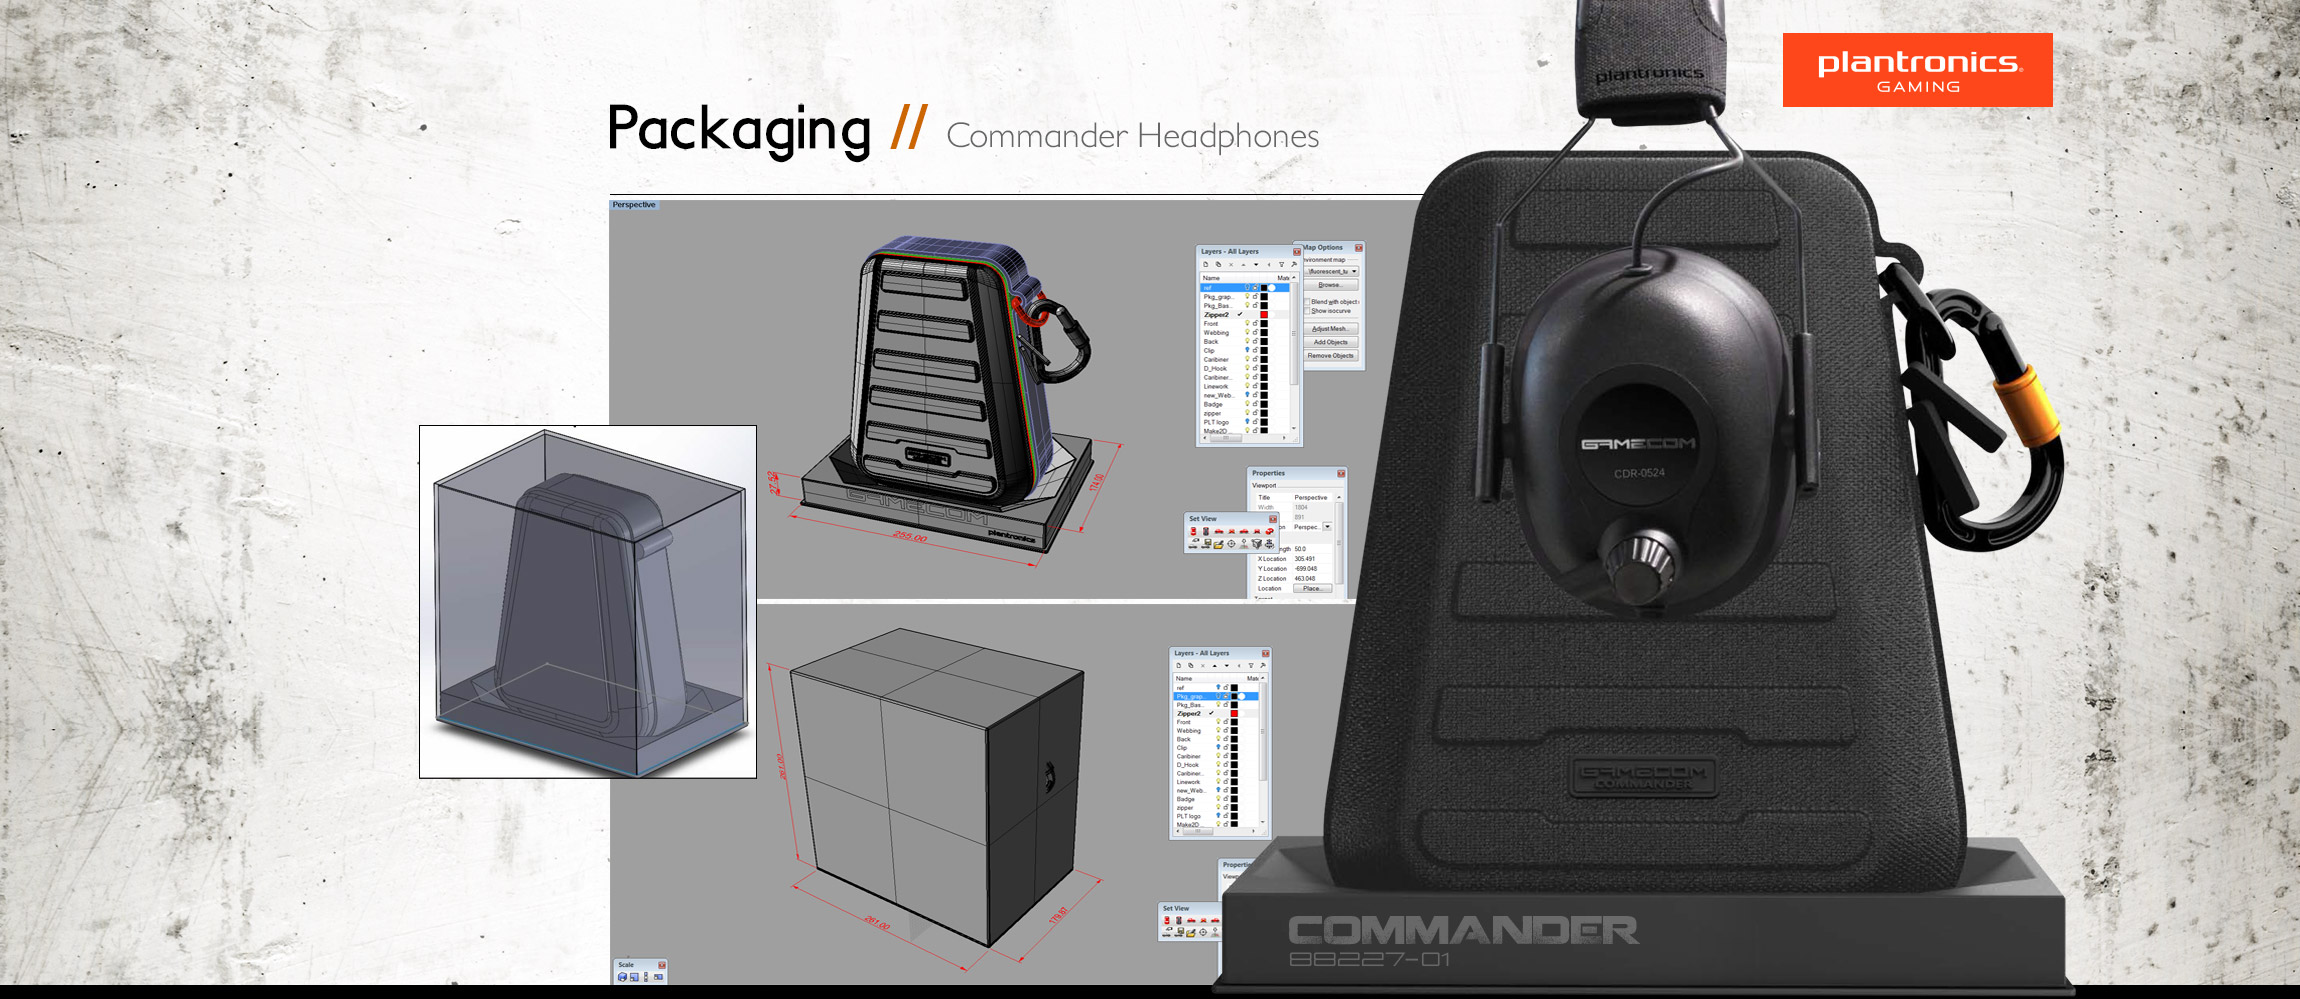 Plantronics Gamecom Commander Gaming Headphones ID Packaging Santa Cruz - Graphic Regime